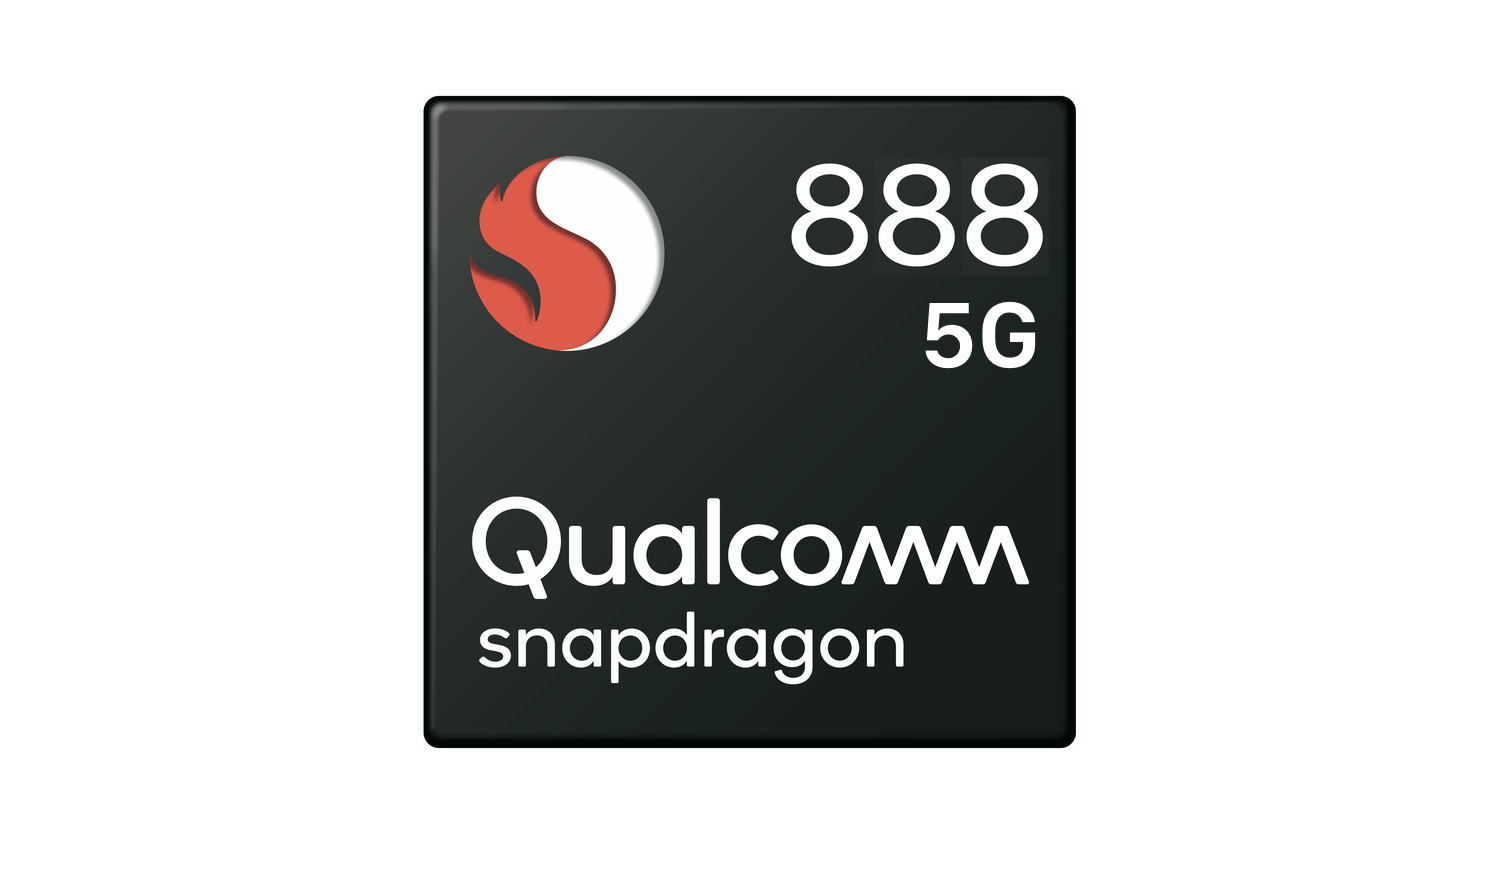 Qualcomm Snapdragon 888 (5G)